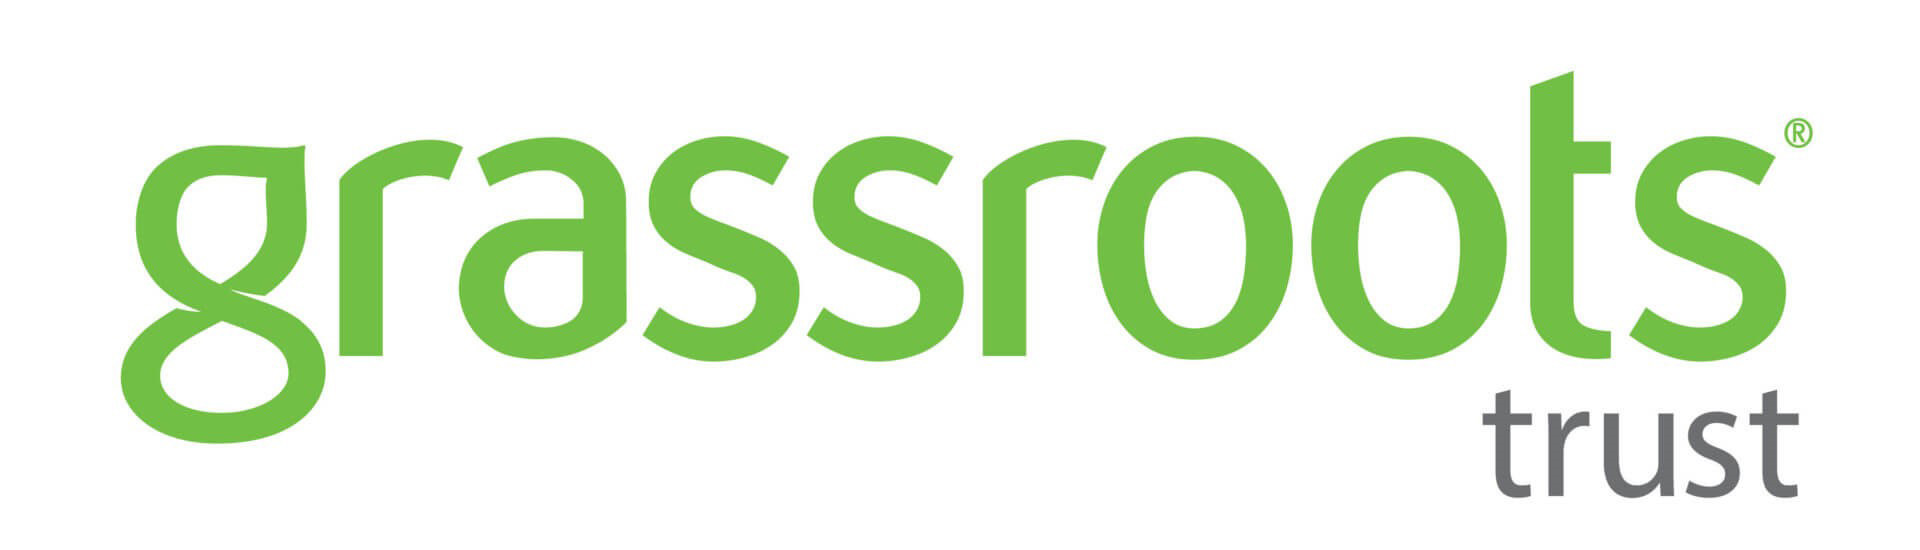 Grassroots Trust logo